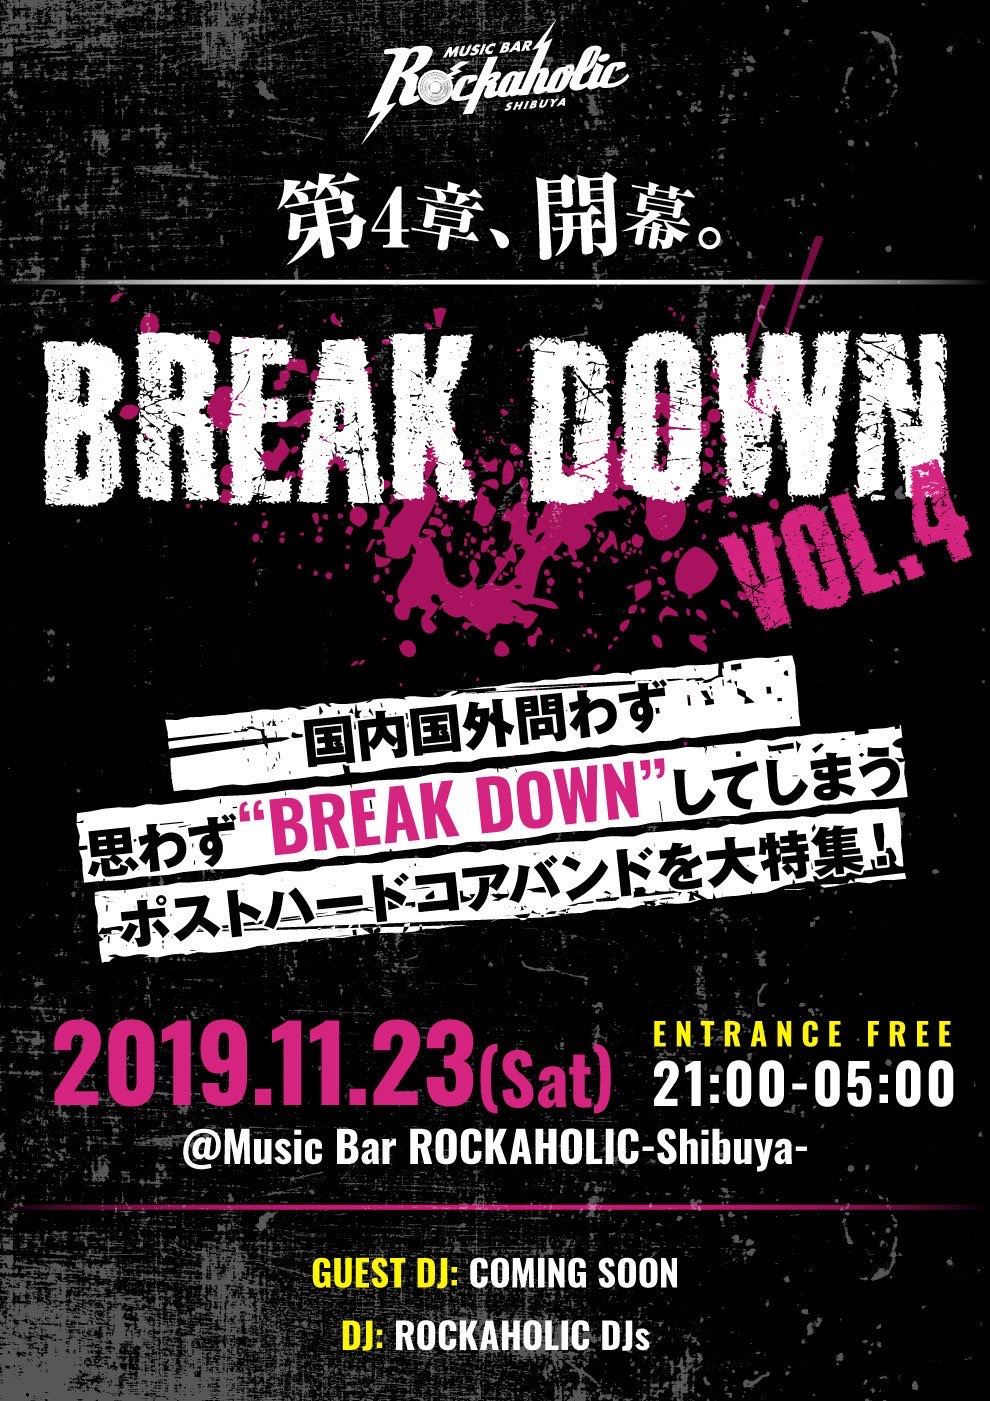 https://bar-rockaholic.jp/shibuya/blog/FDBE9E67-4E85-4A80-B561-6D0181774D43.jpeg